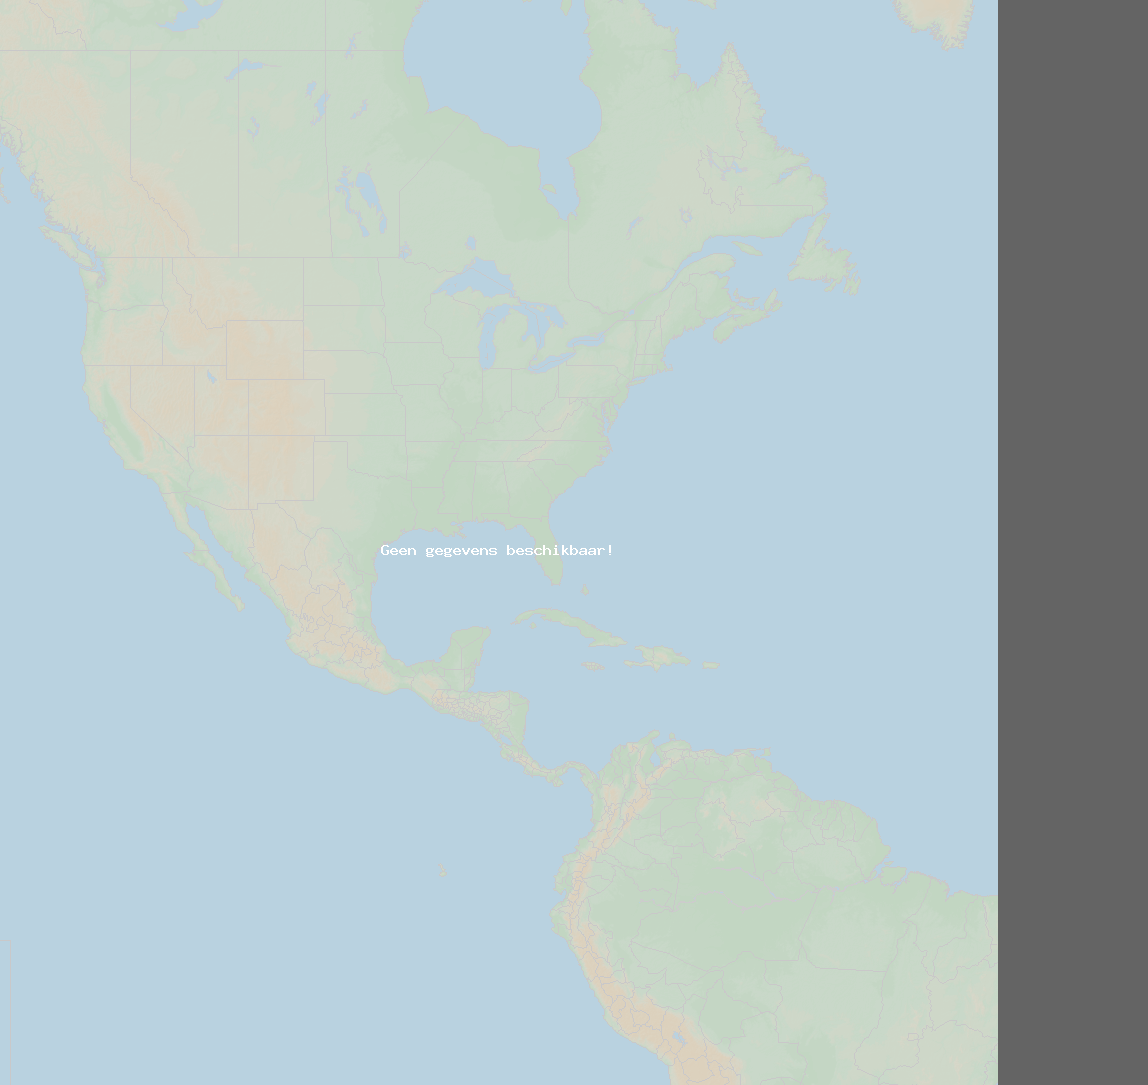 Inslagverhouding (Station Kingsport (Blue)) North America 2021 januari